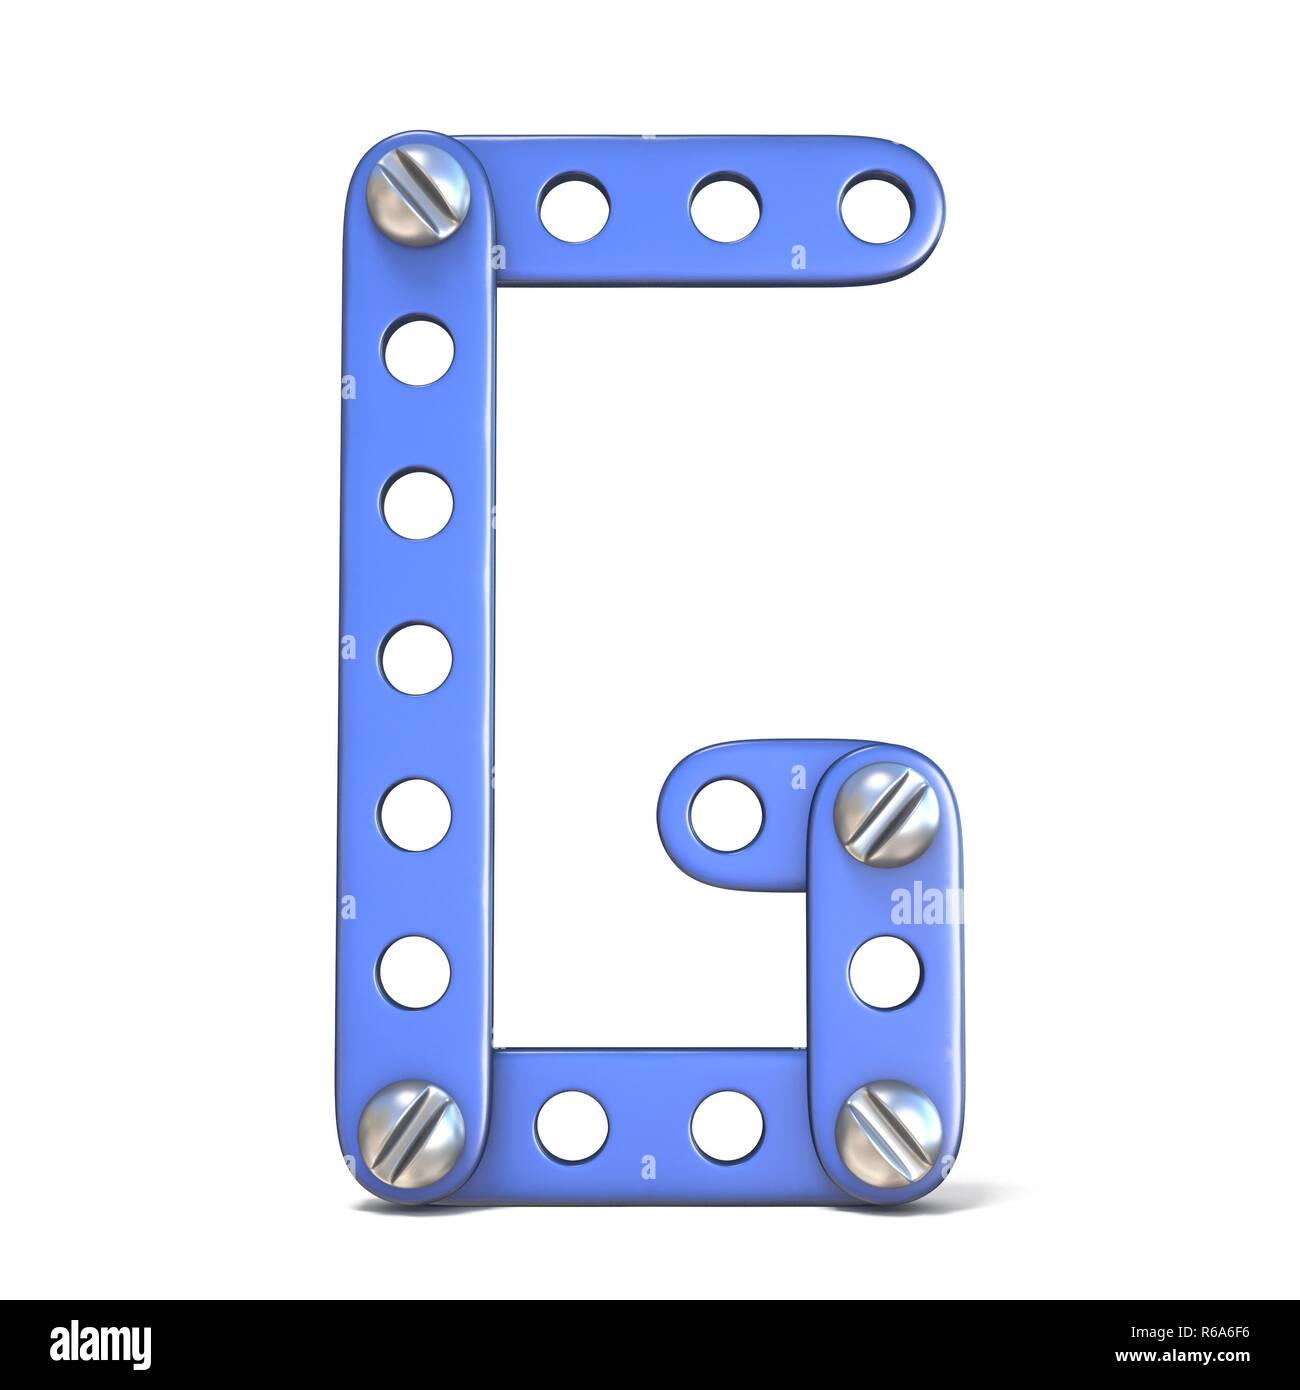 Alphabet aus blauem Metall Konstruktor Spielzeug schreiben E3D  Stockfotografie - Alamy